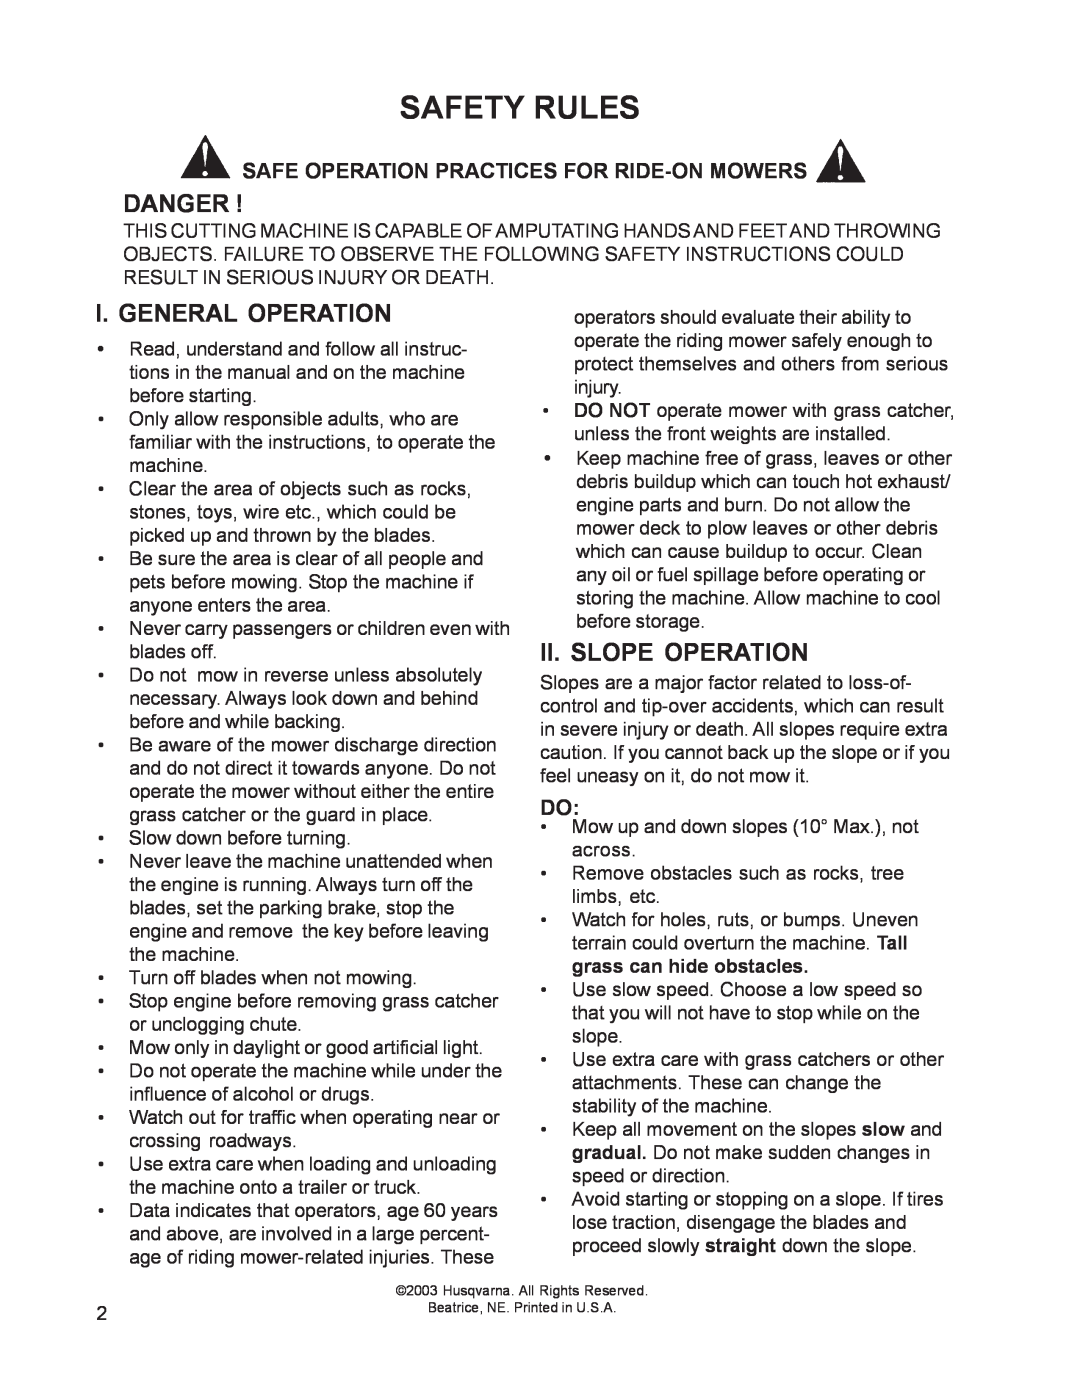 Husqvarna 968999211 / CZ48 manual Safety Rules, Danger, I. General Operation, Ii. Slope Operation 